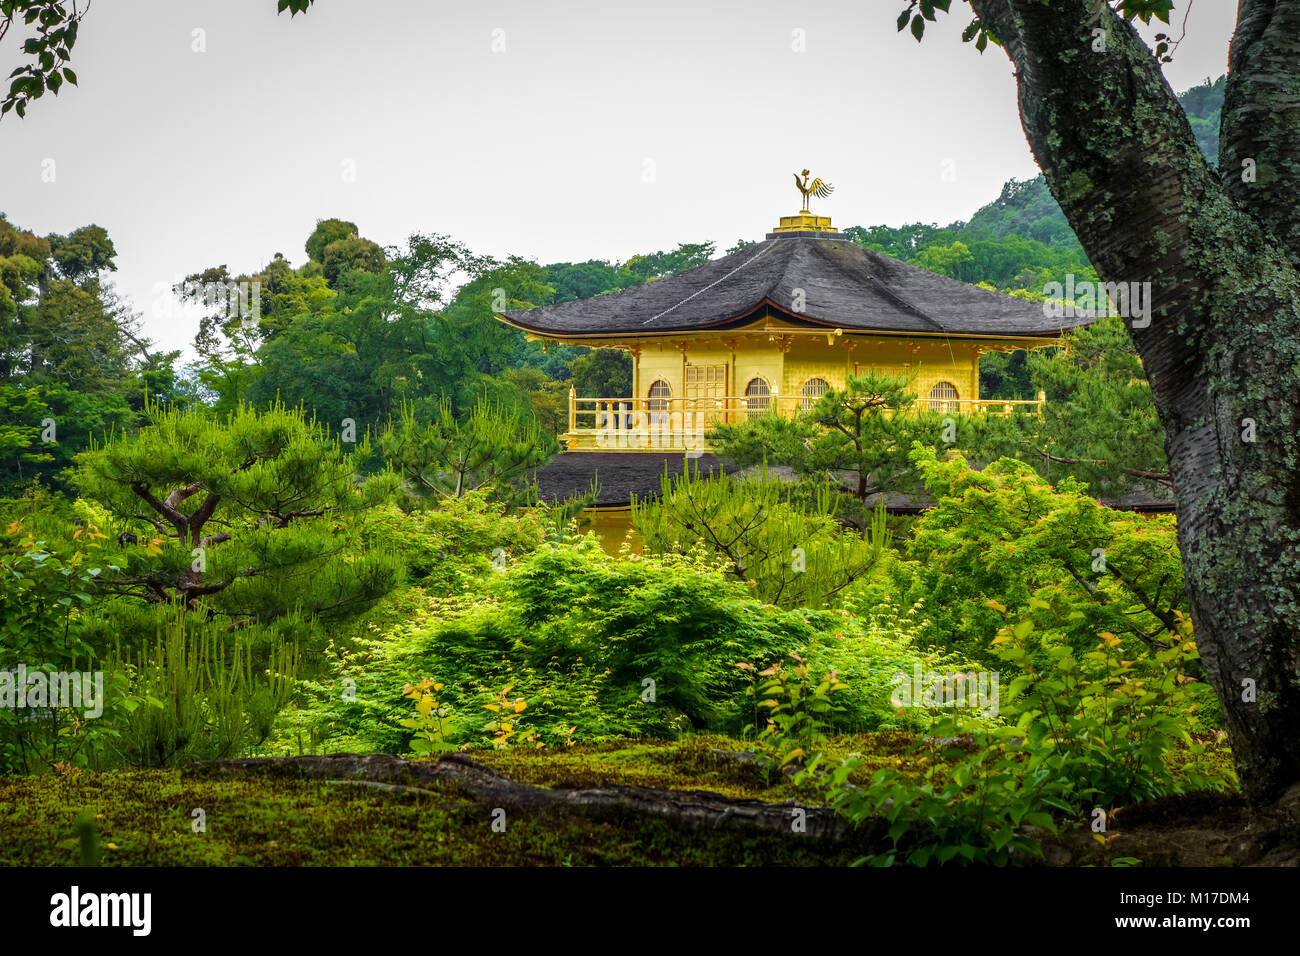 Kinkaku-ji golden temple pavilion in Kyoto, Japan Stock Photo